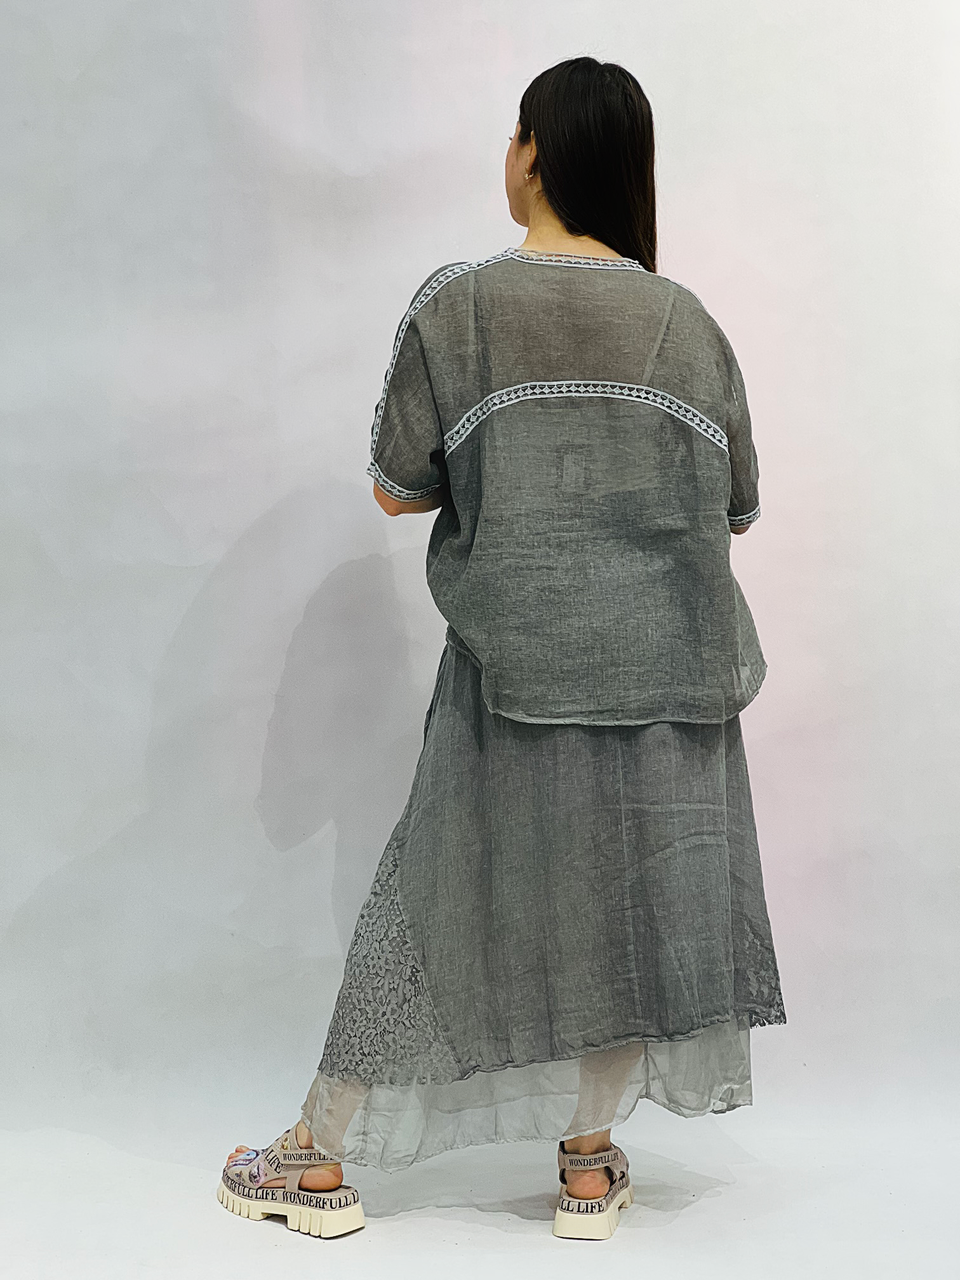 Женская юбка Angel / Размер: Free size. Цвет: Серый. Состав: Лен. - фото 2